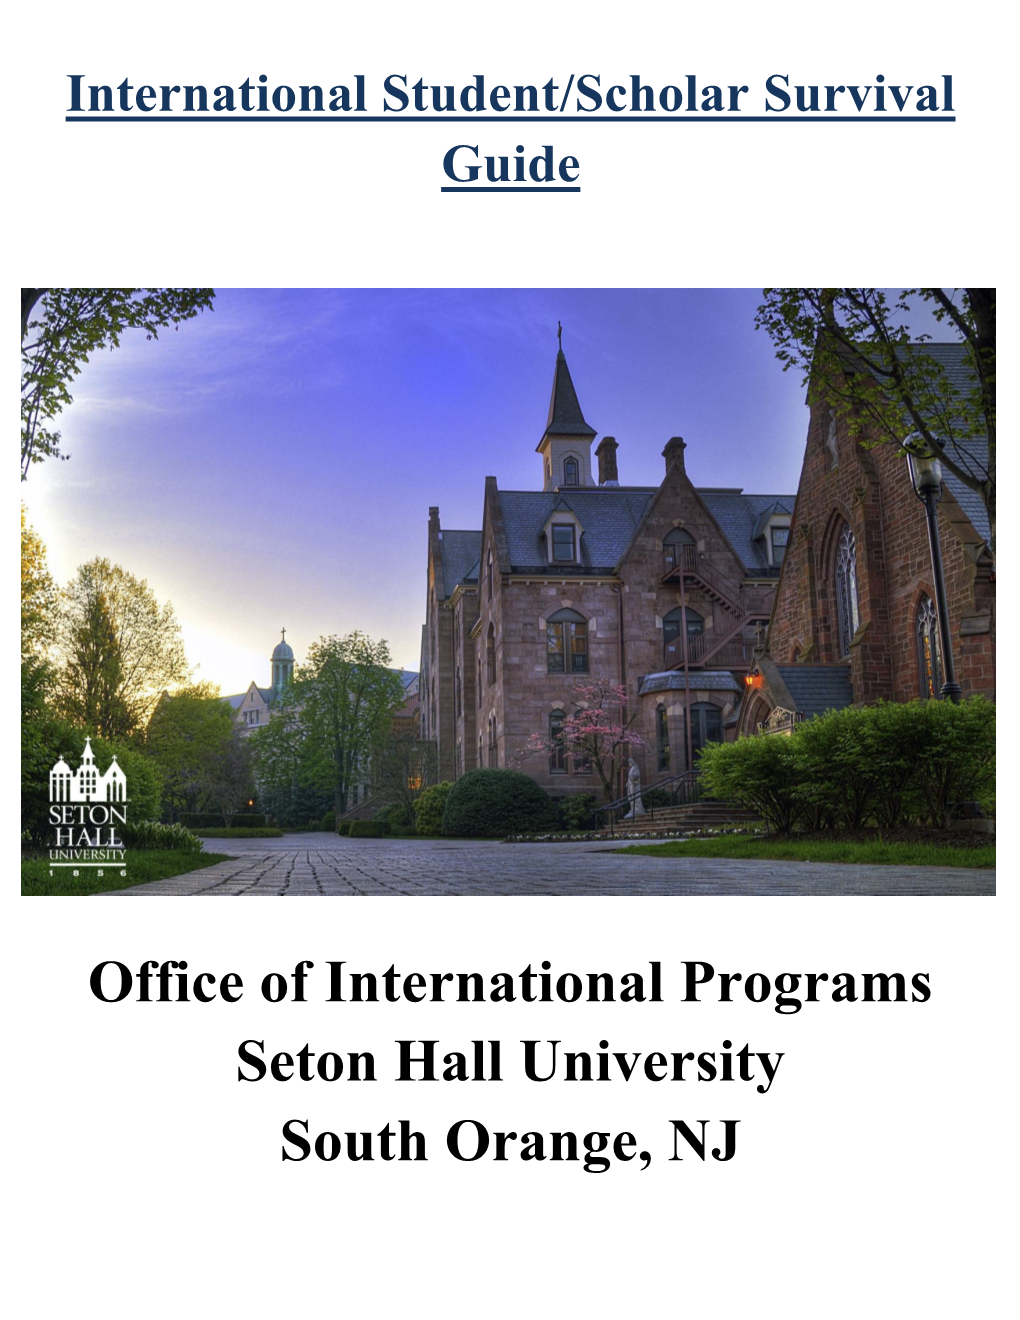 Office of International Programs Seton Hall University South Orange, NJ